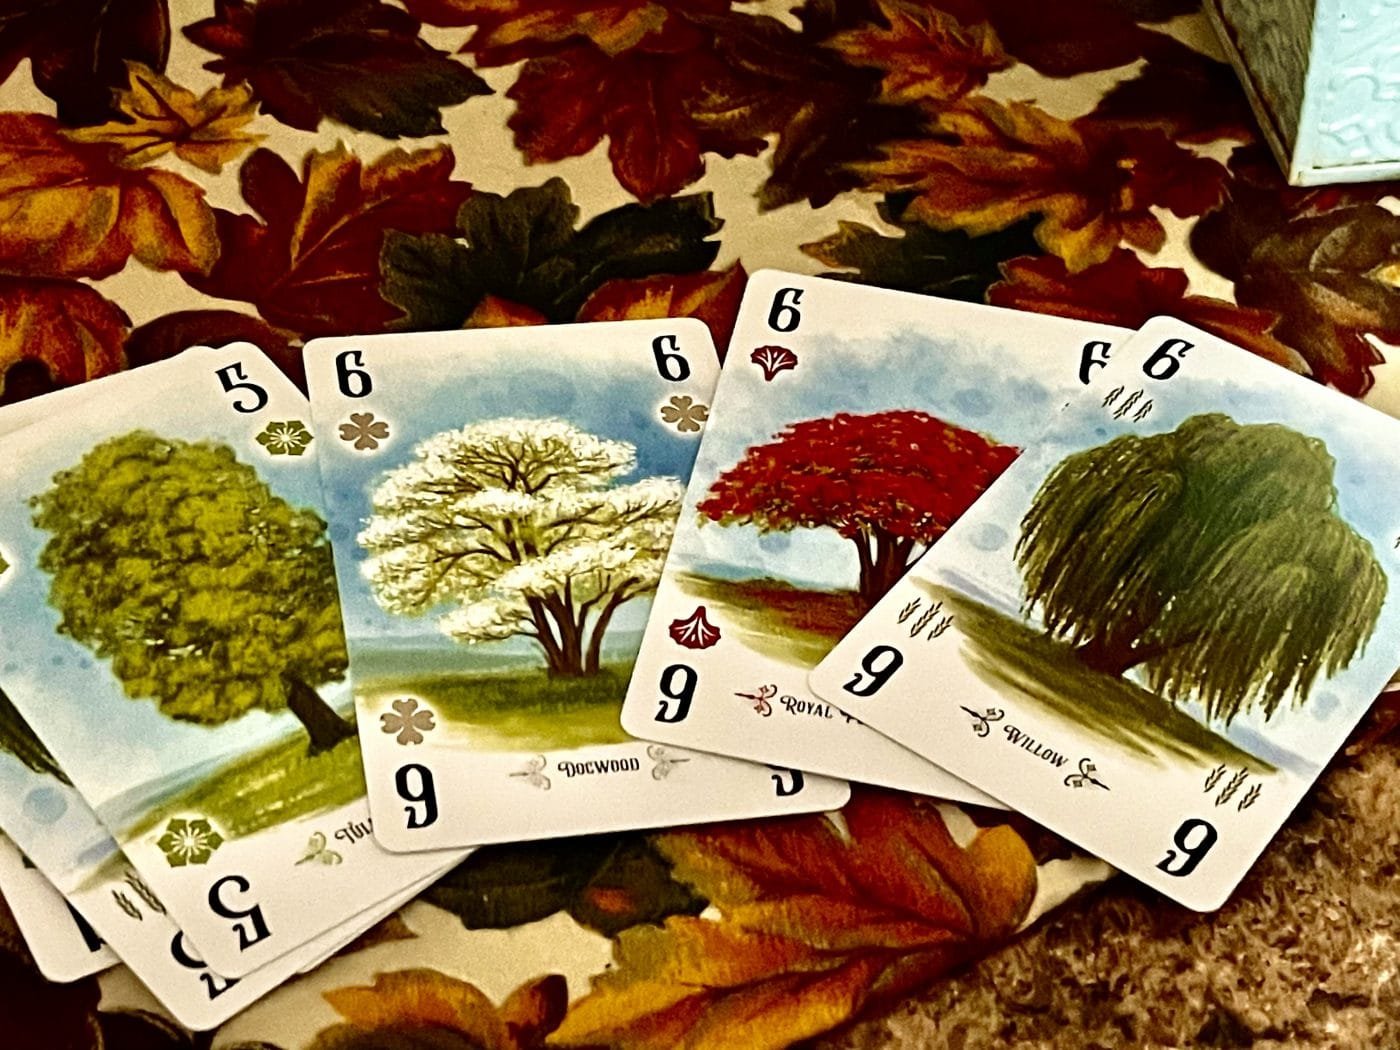 A few of the trees represented in Arboretum